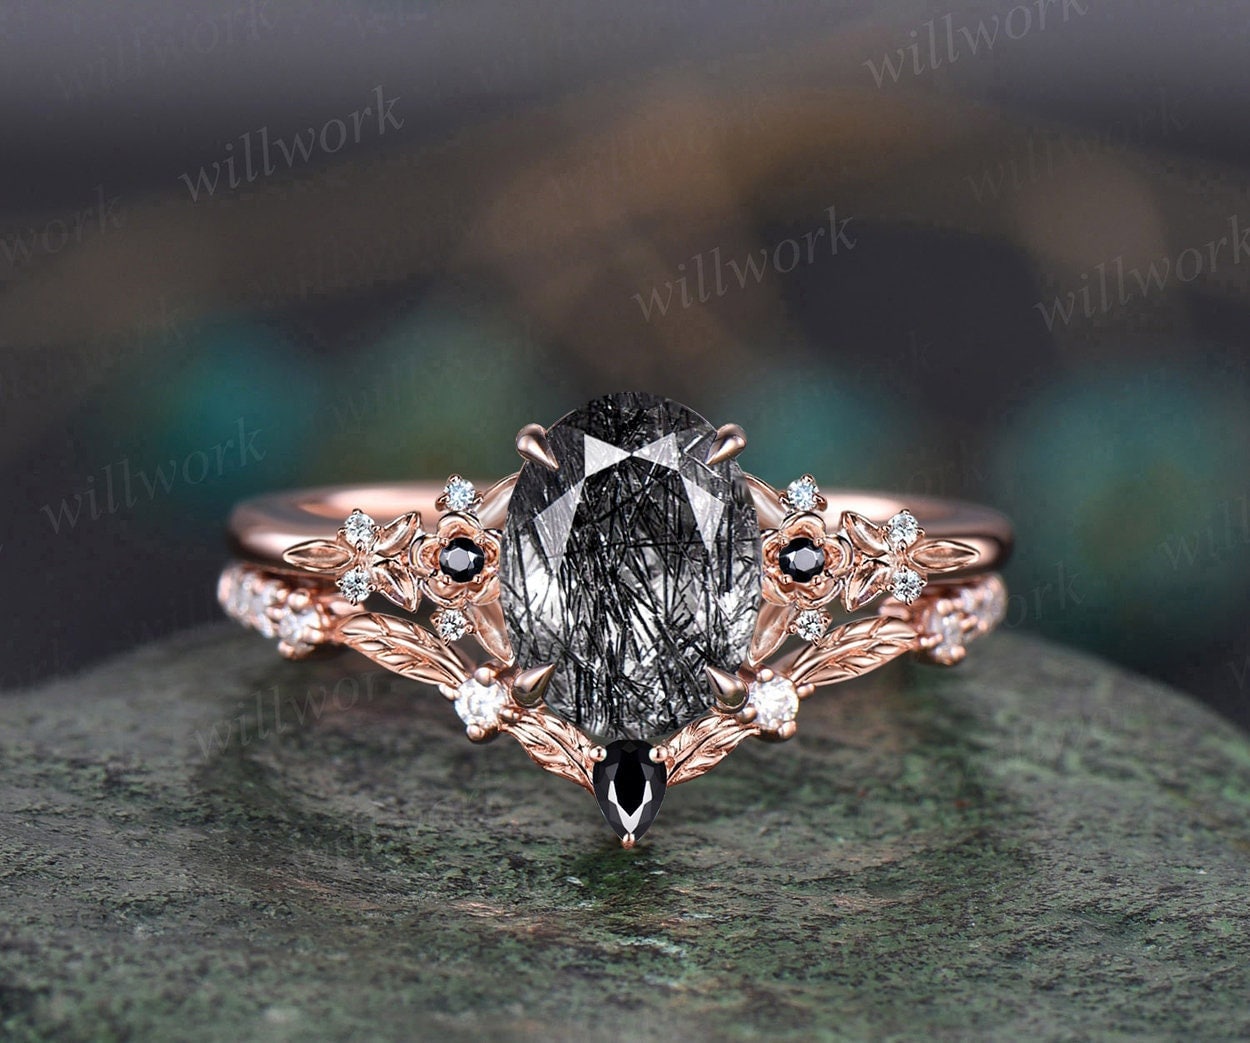 Black 14k Obsidian Diamond Rings Woman Peridot Mystic Gemstone Bizuteria  Anillos De Gothic Jewelry For Charm Couple Diamante Rings 2019 J0112 From  Lianwu09, $32.14 | DHgate.Com